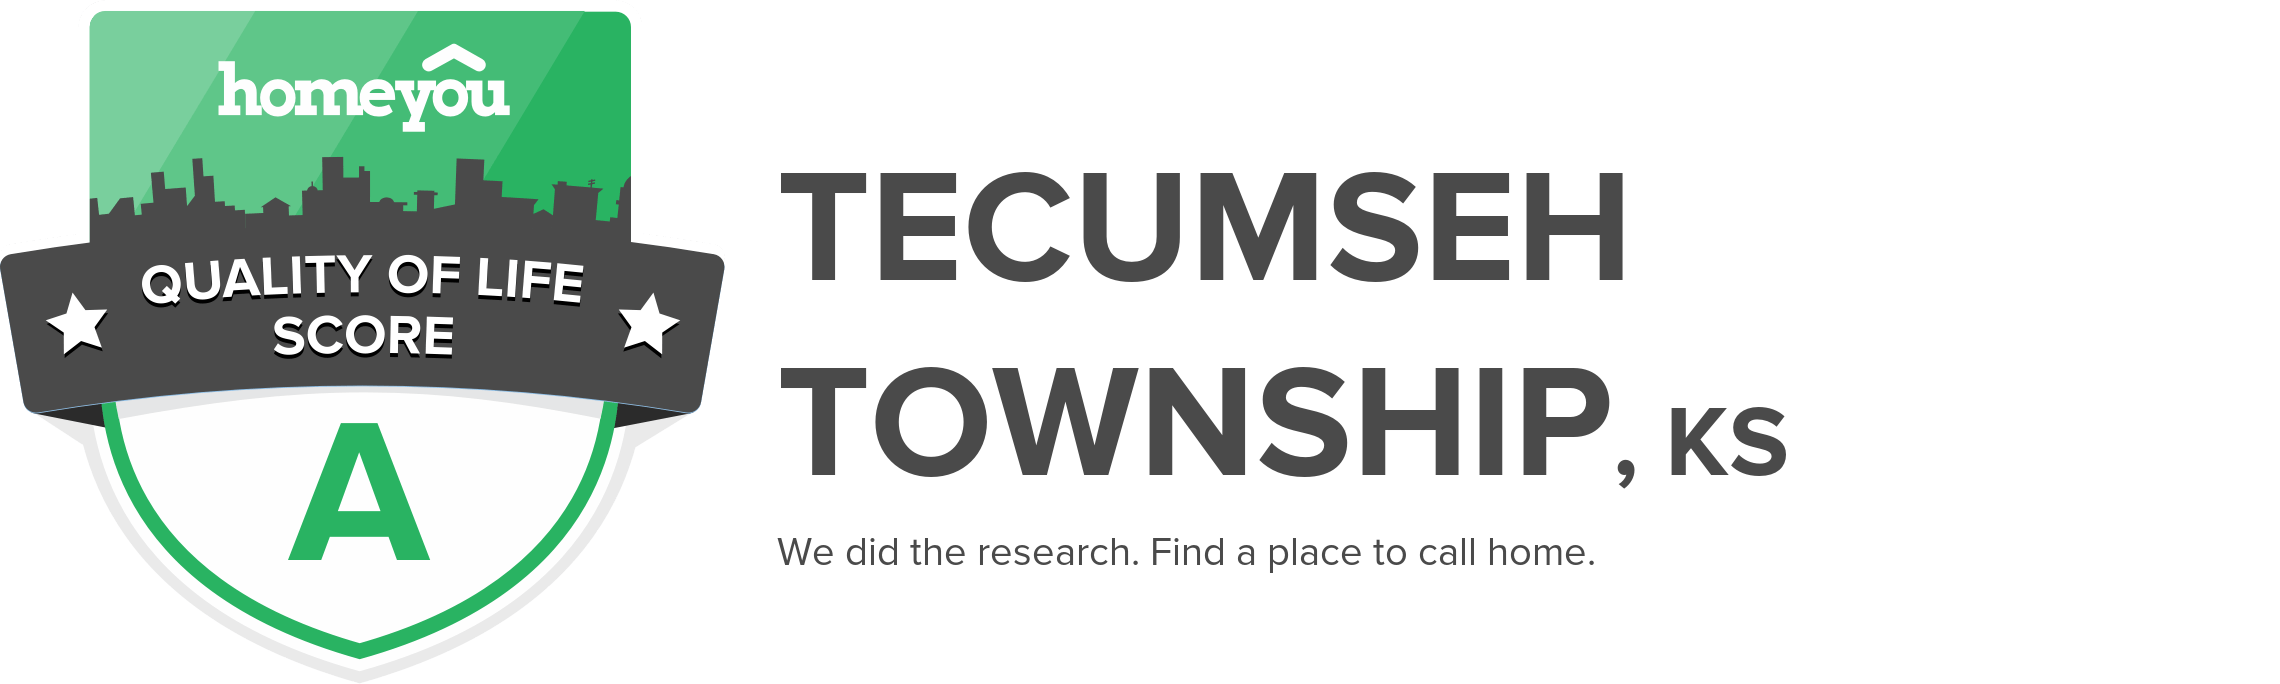 Tecumseh township, KS